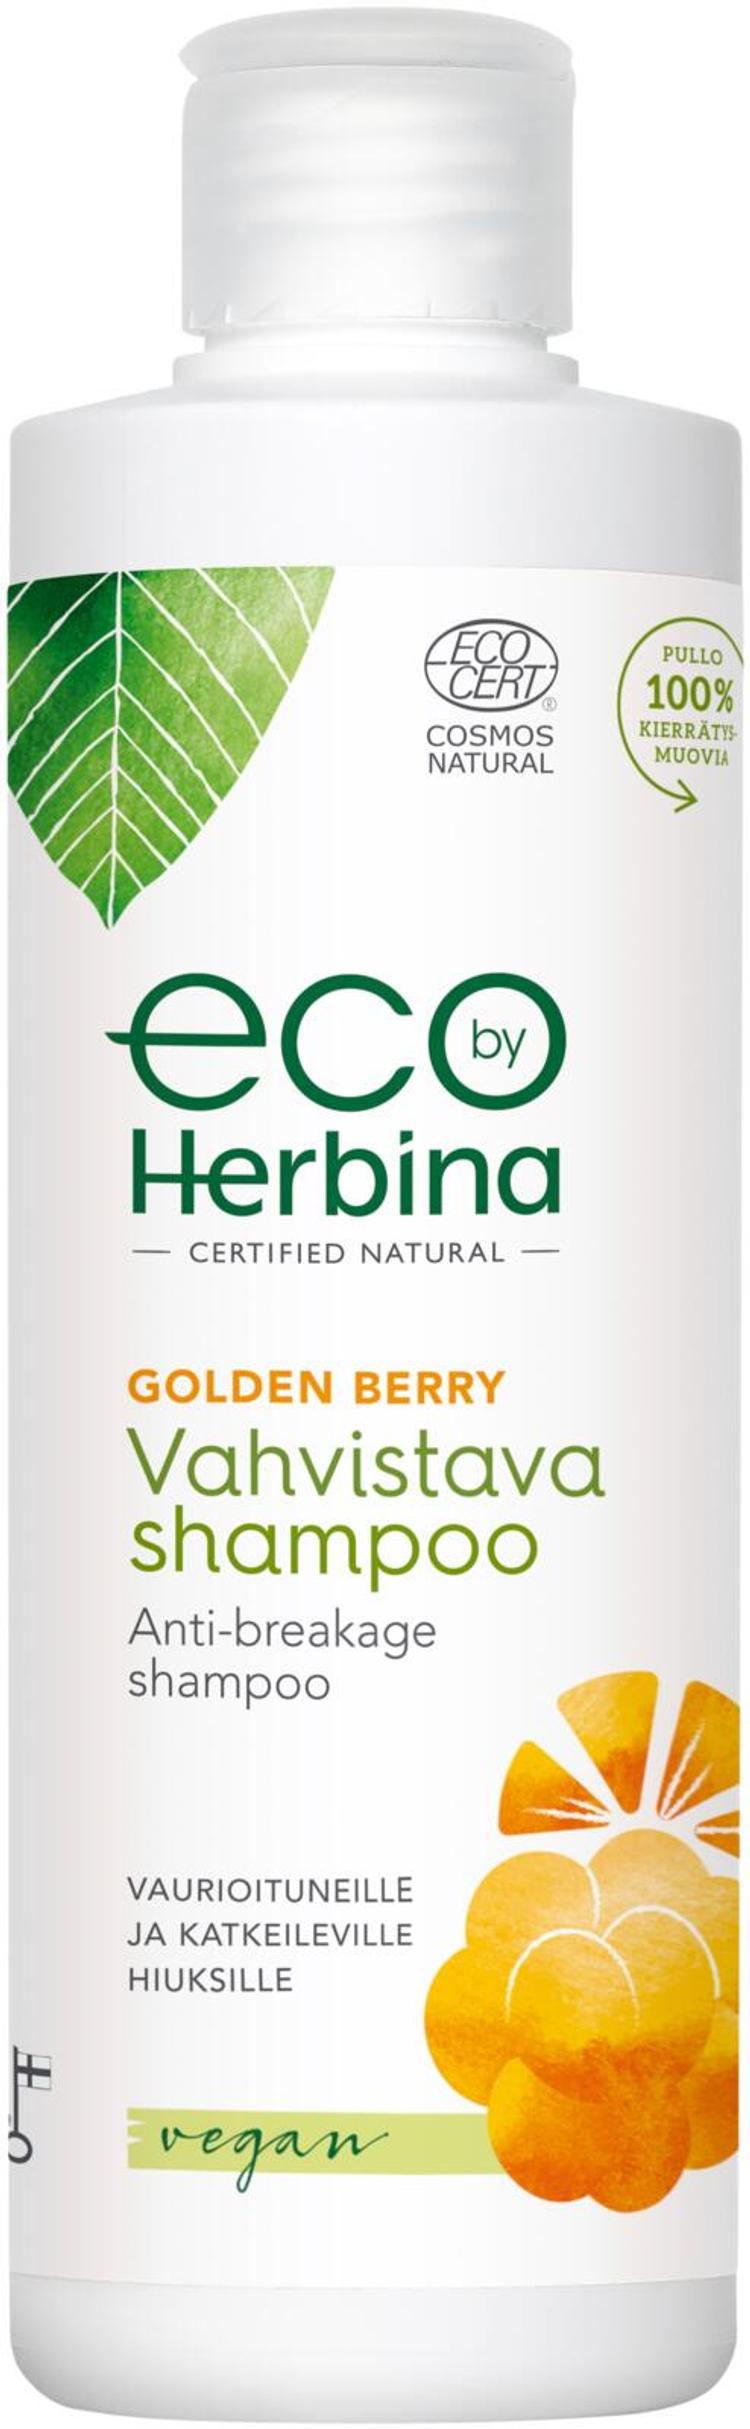 Eco by Herbina 250ml Golden Berry Anti-breakage shampoo